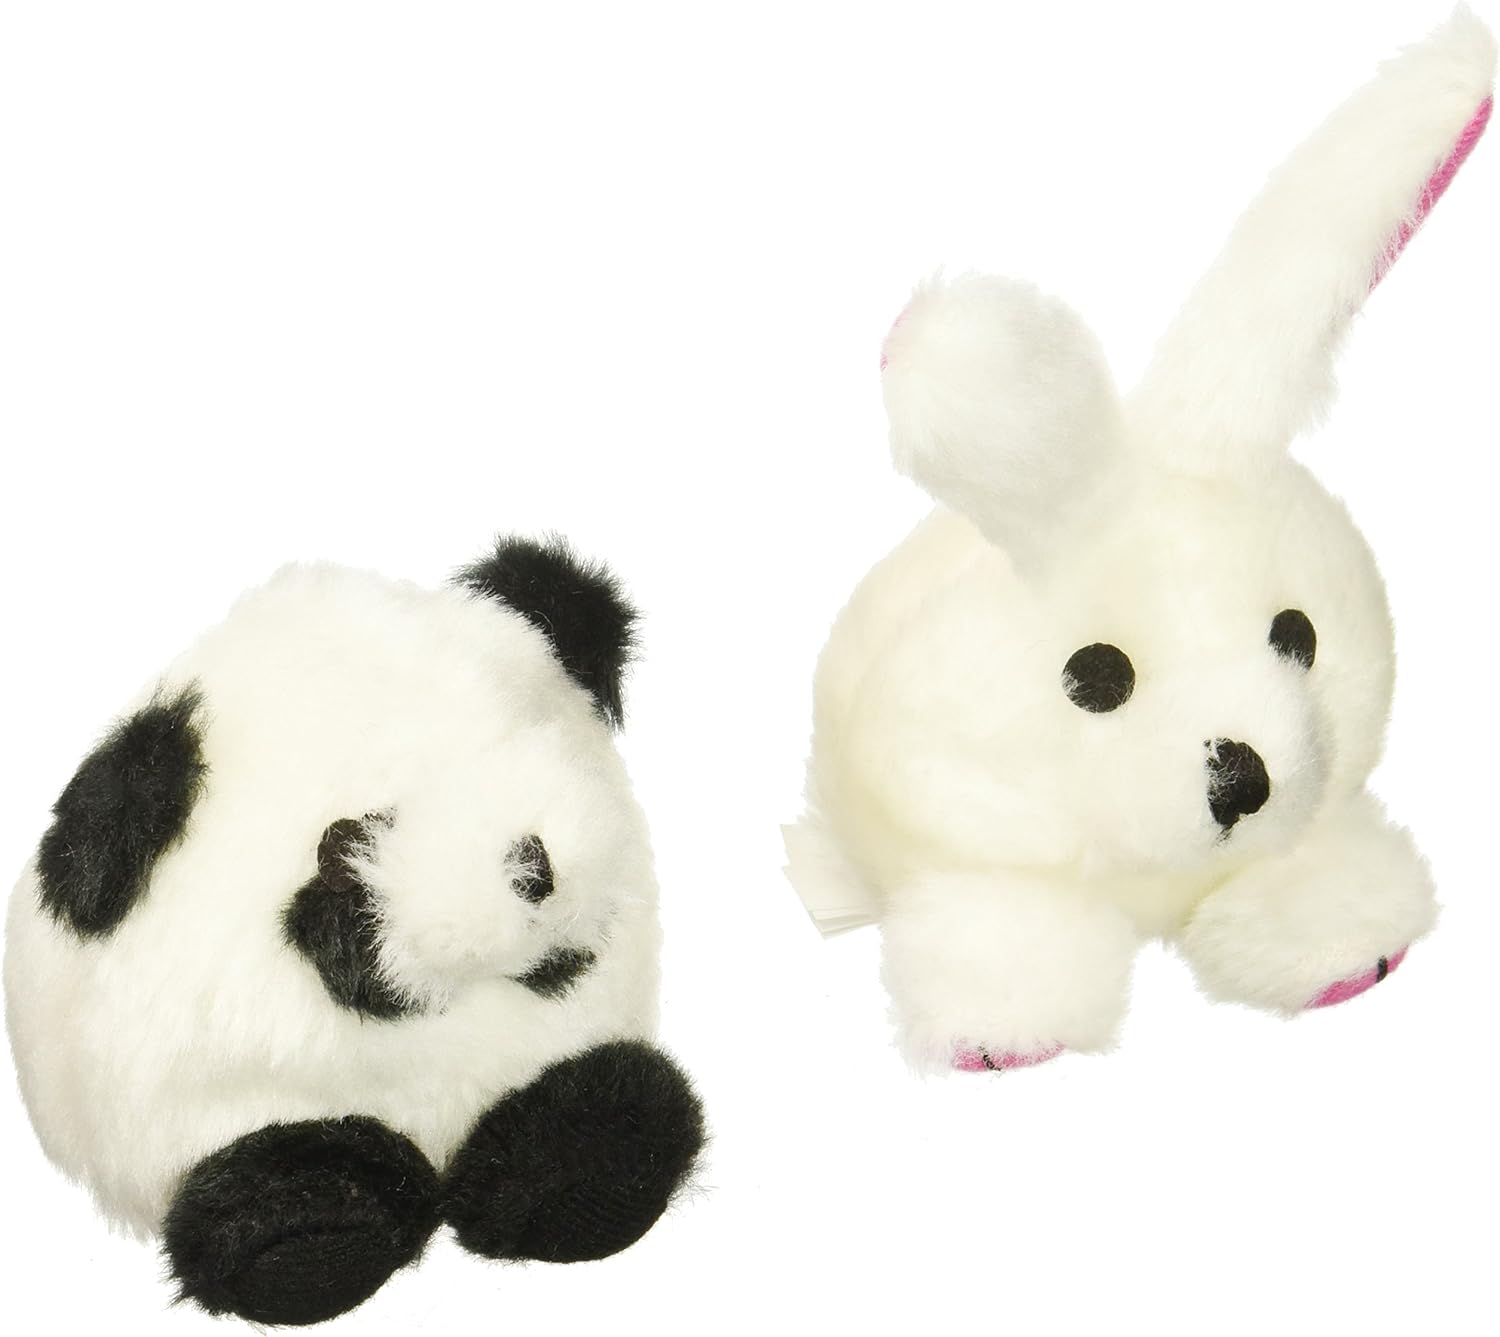 Zoobilee Small Dog & Puppy Squatter Panda / Rabbit